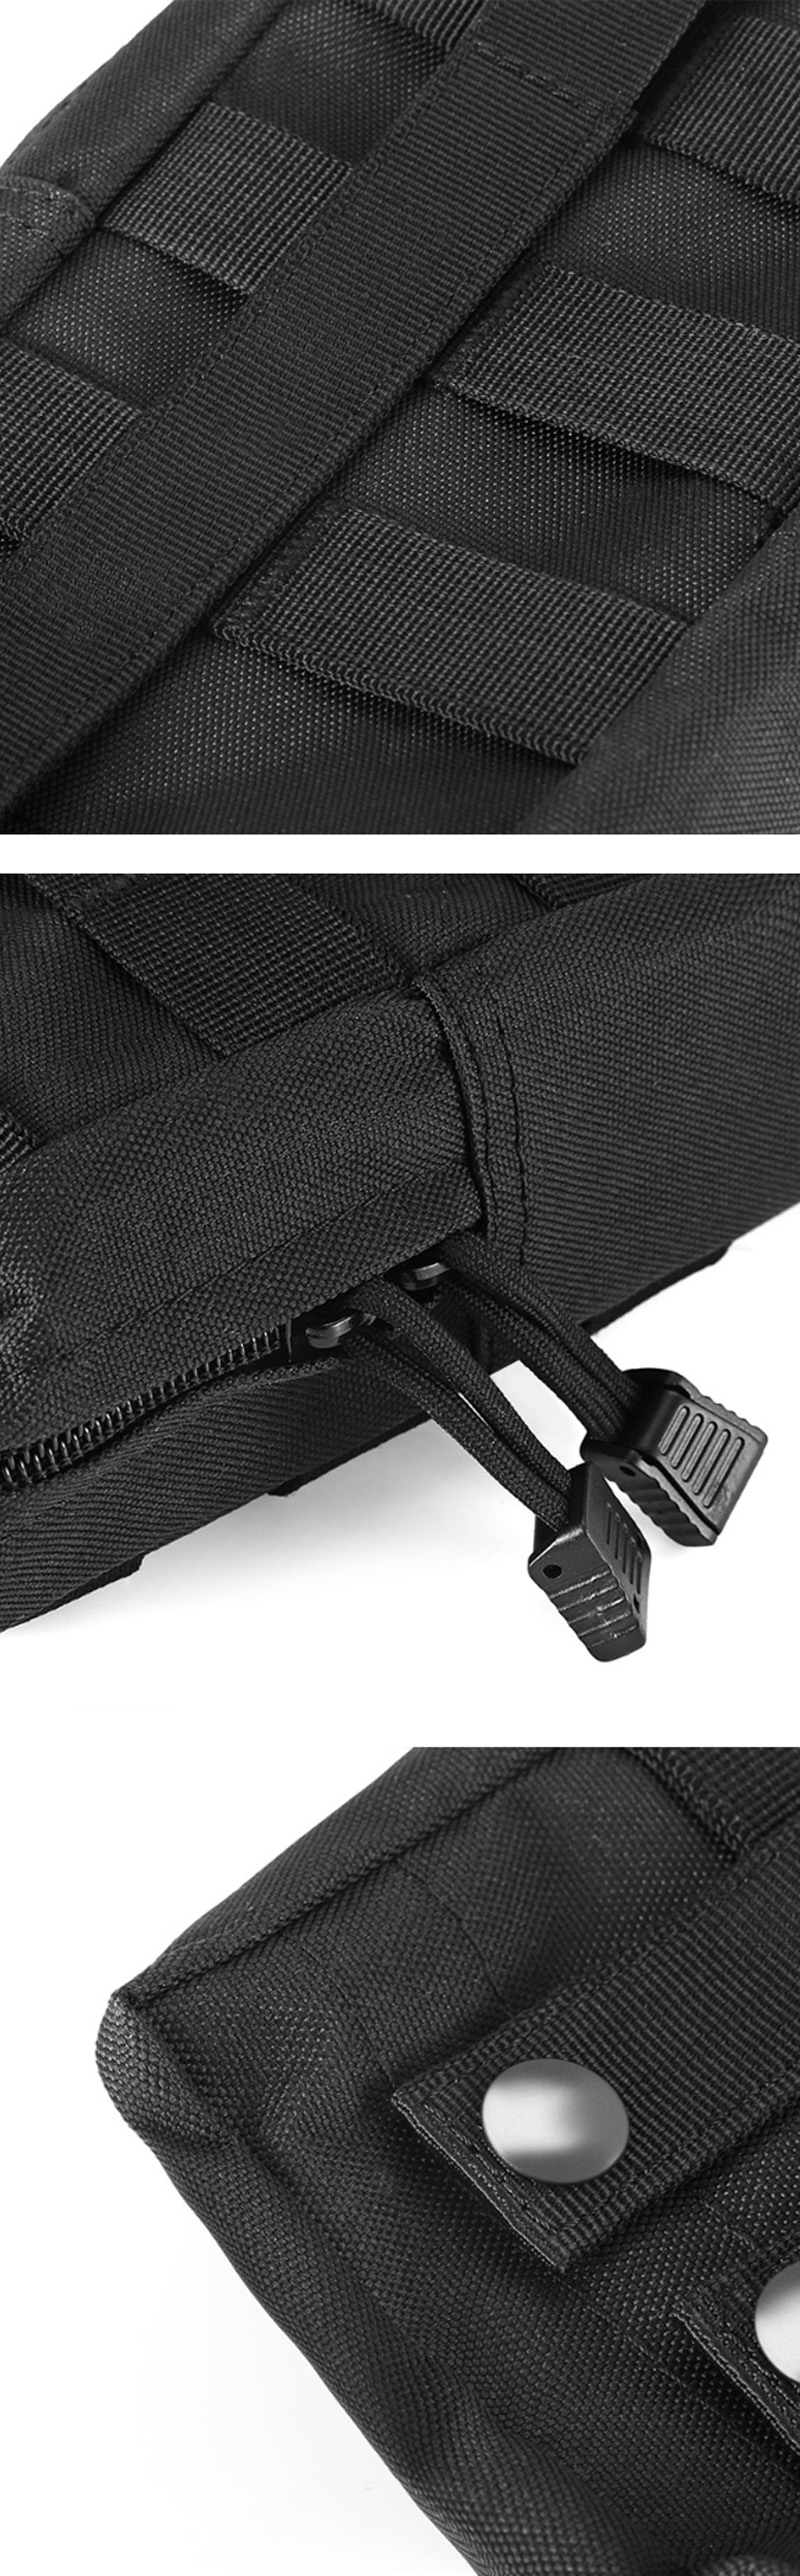 Men-Molle-Tactical-Bag-Accessory-Waist-Bag-Running-Cycling-Phone-Bag-1590498-2